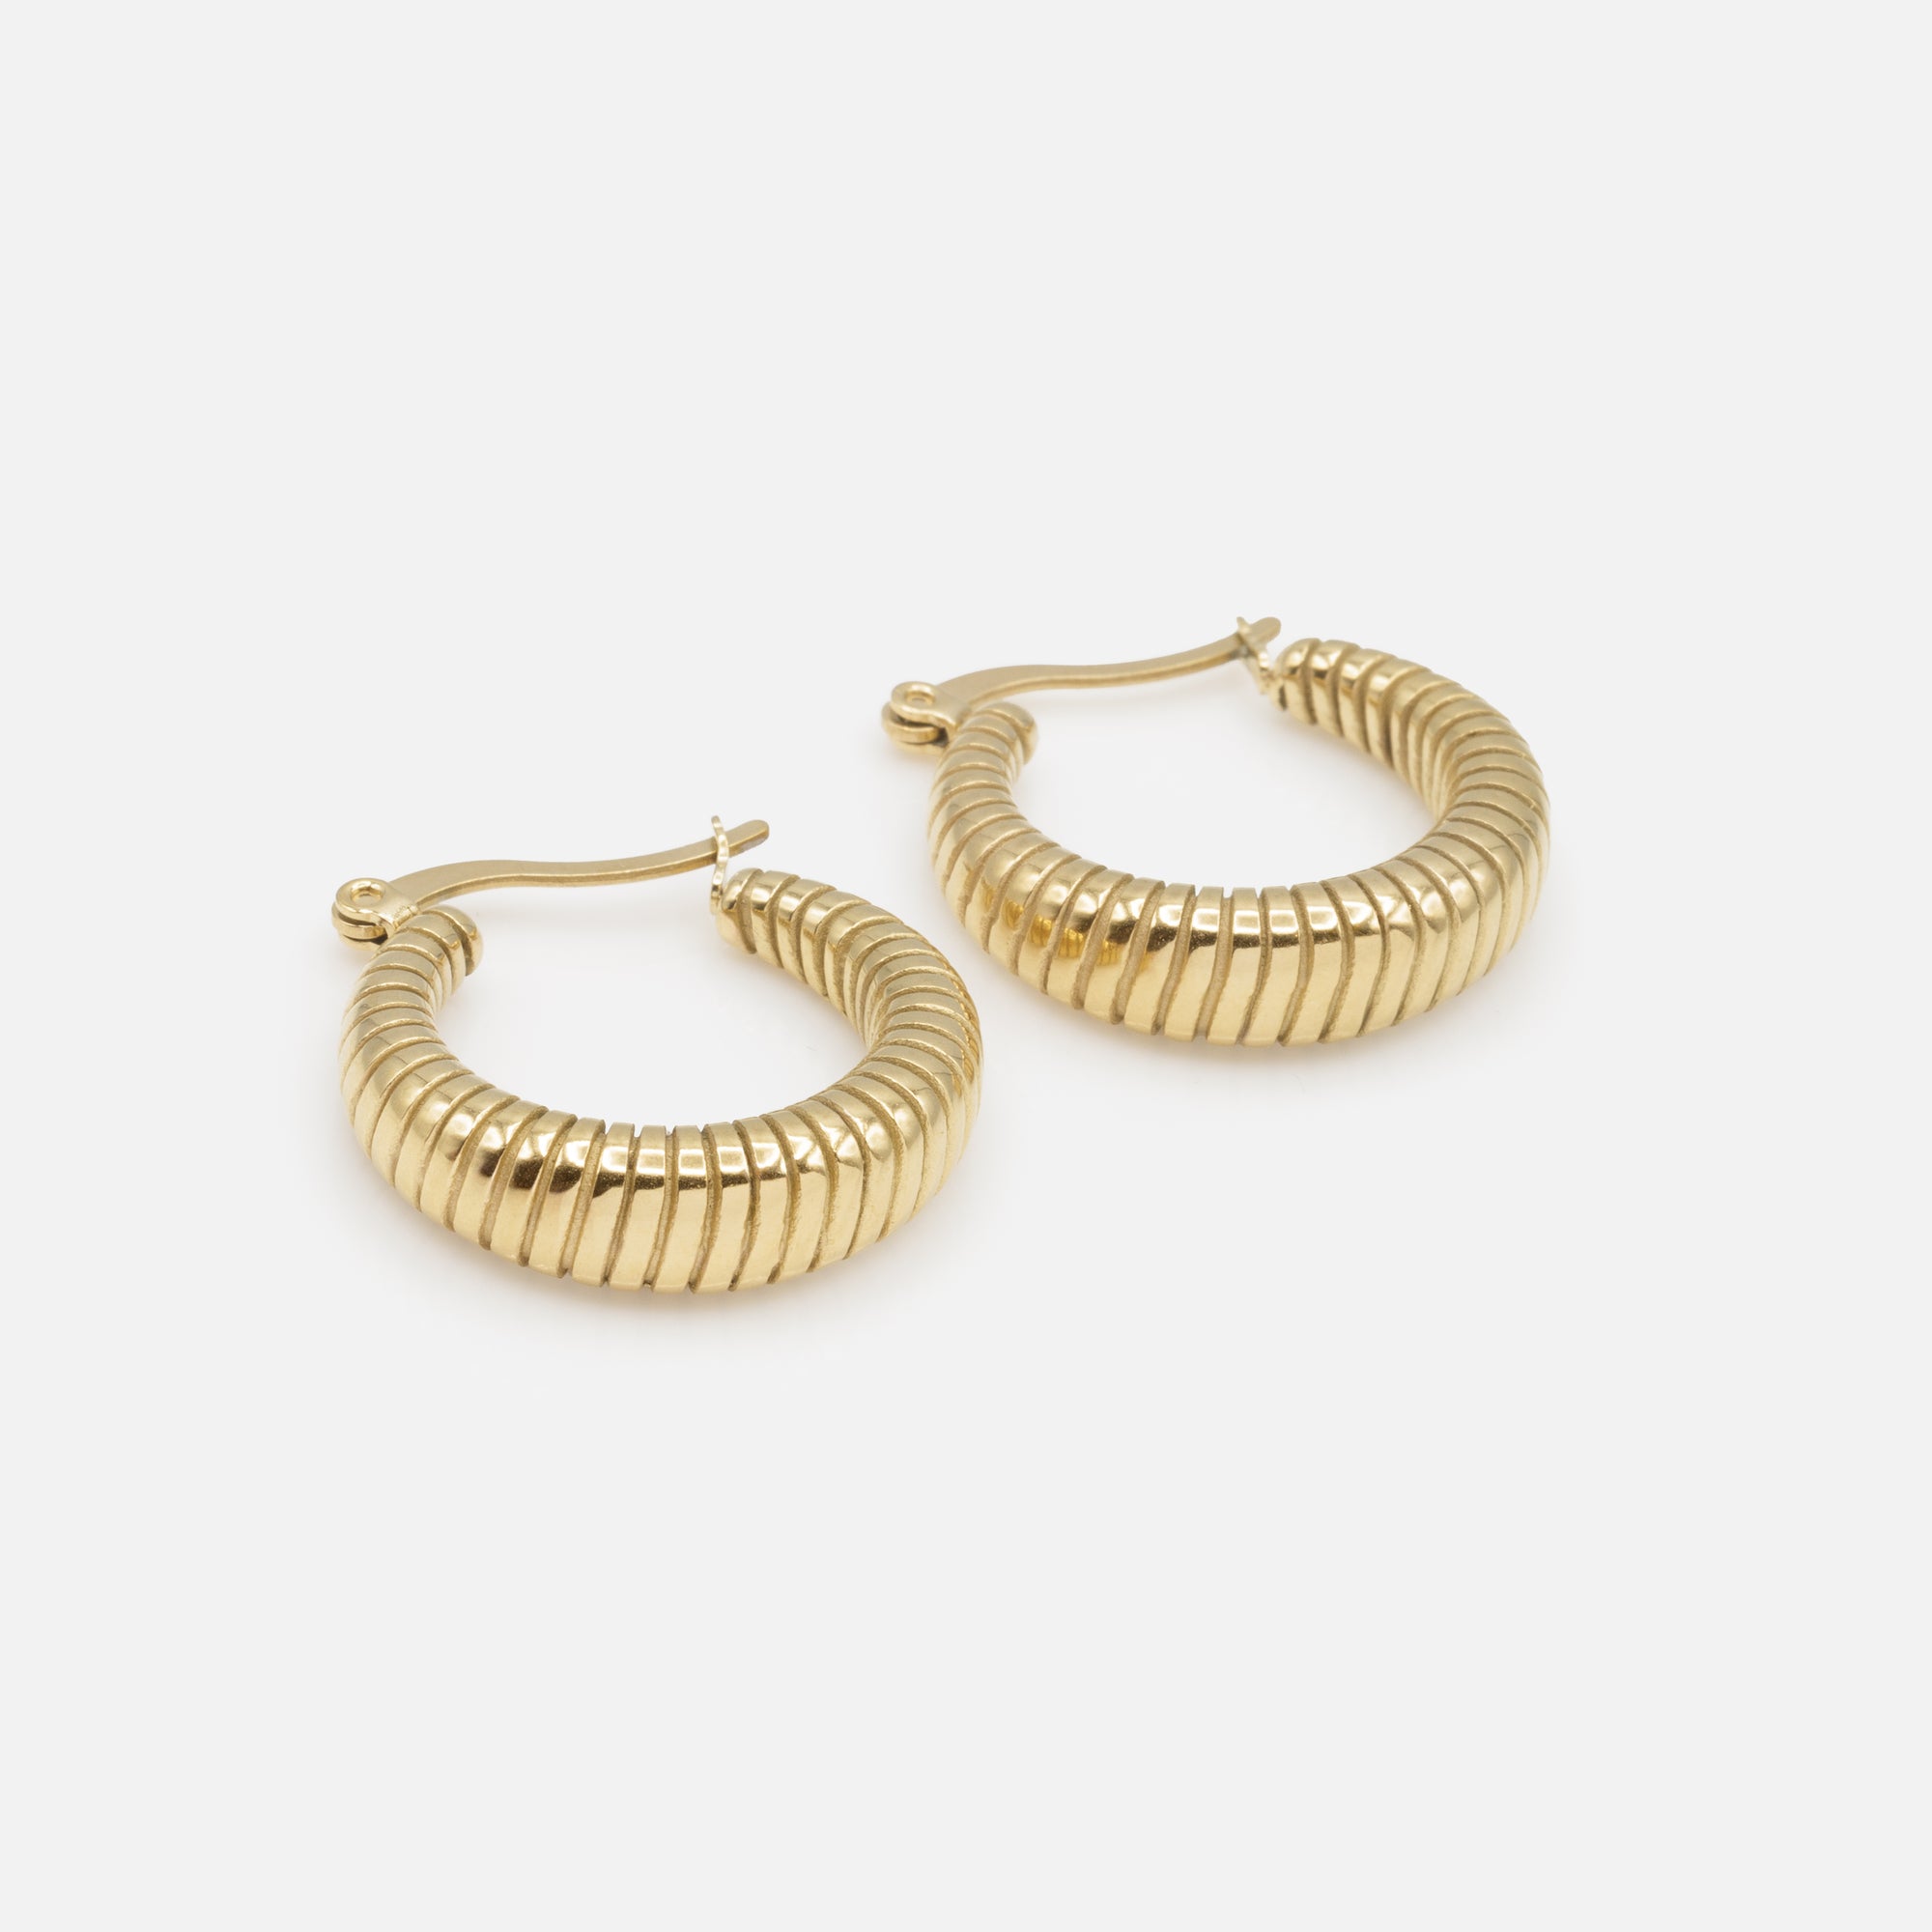 Wide gold hoop earrings with grooves in stainless steel 